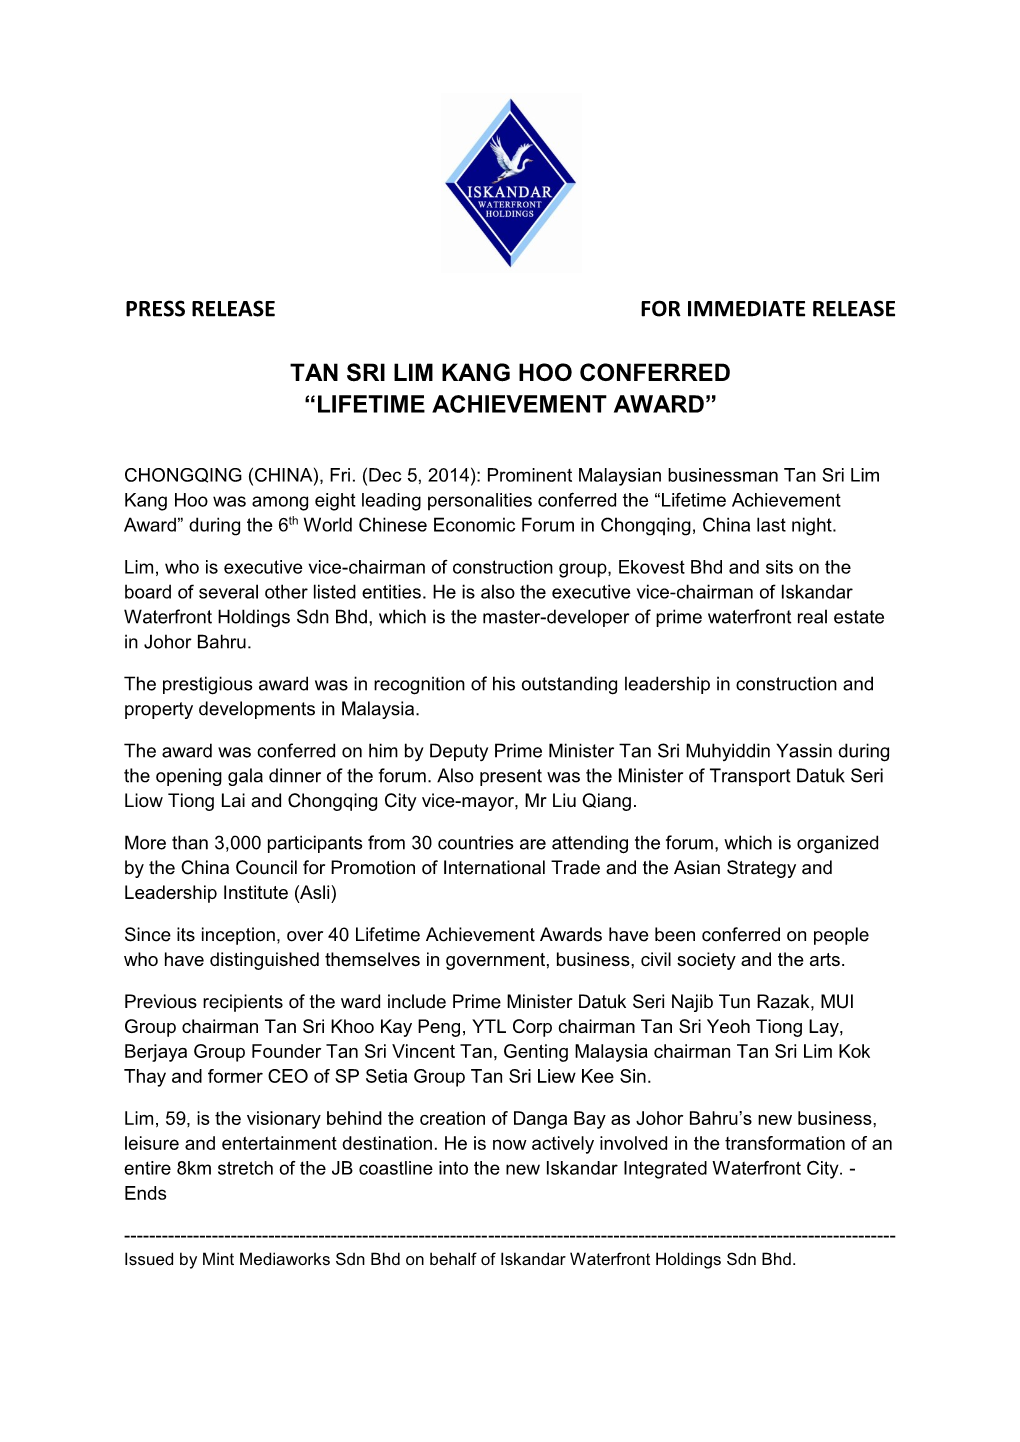 Press Release for Immediate Release Tan Sri Lim Kang Hoo Conferred “Lifetime Achievement Award”